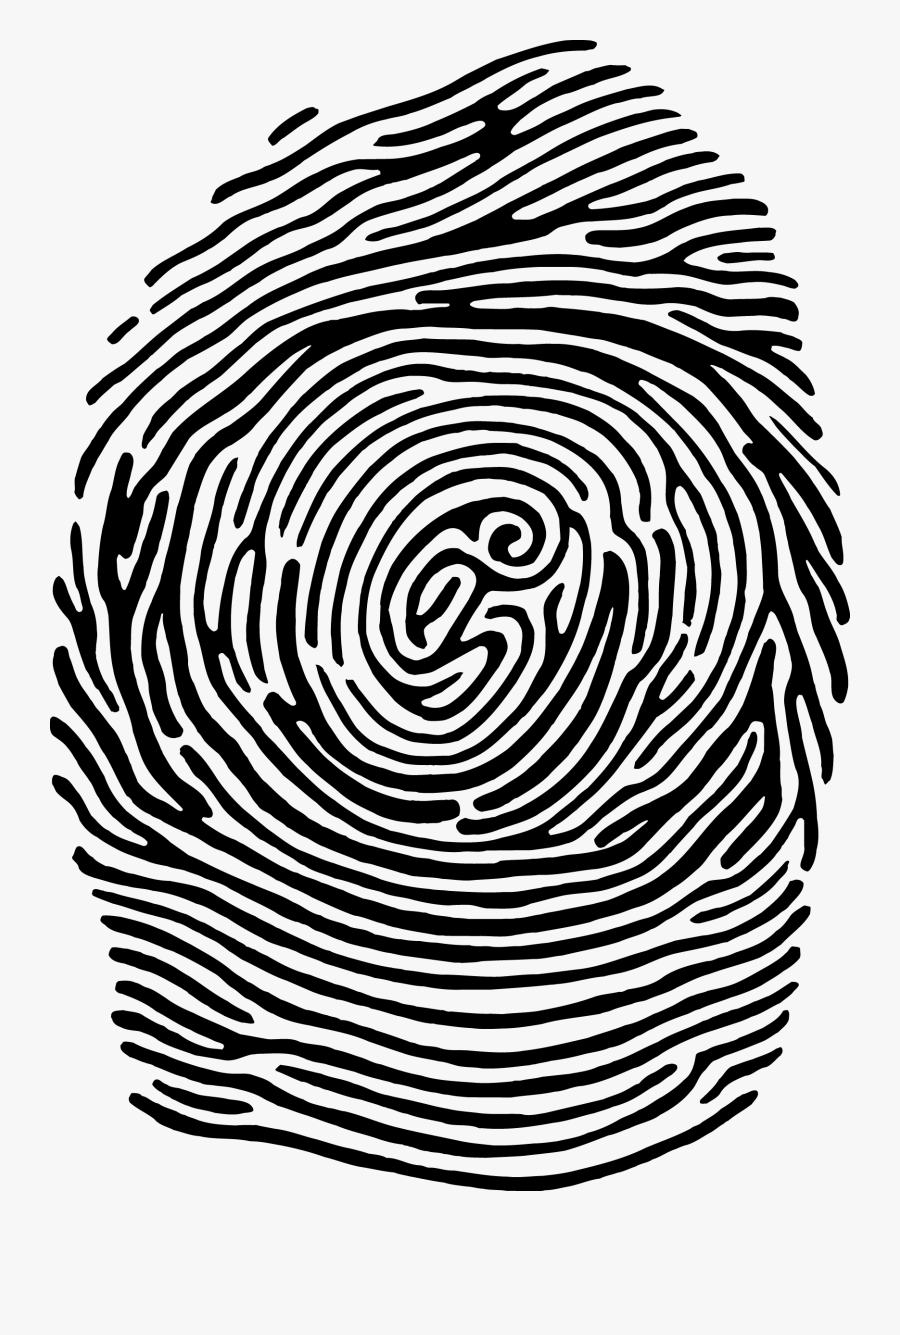 Freeuse Download Fingerprint Clipart Simplified - Agency D3, Transparent Clipart